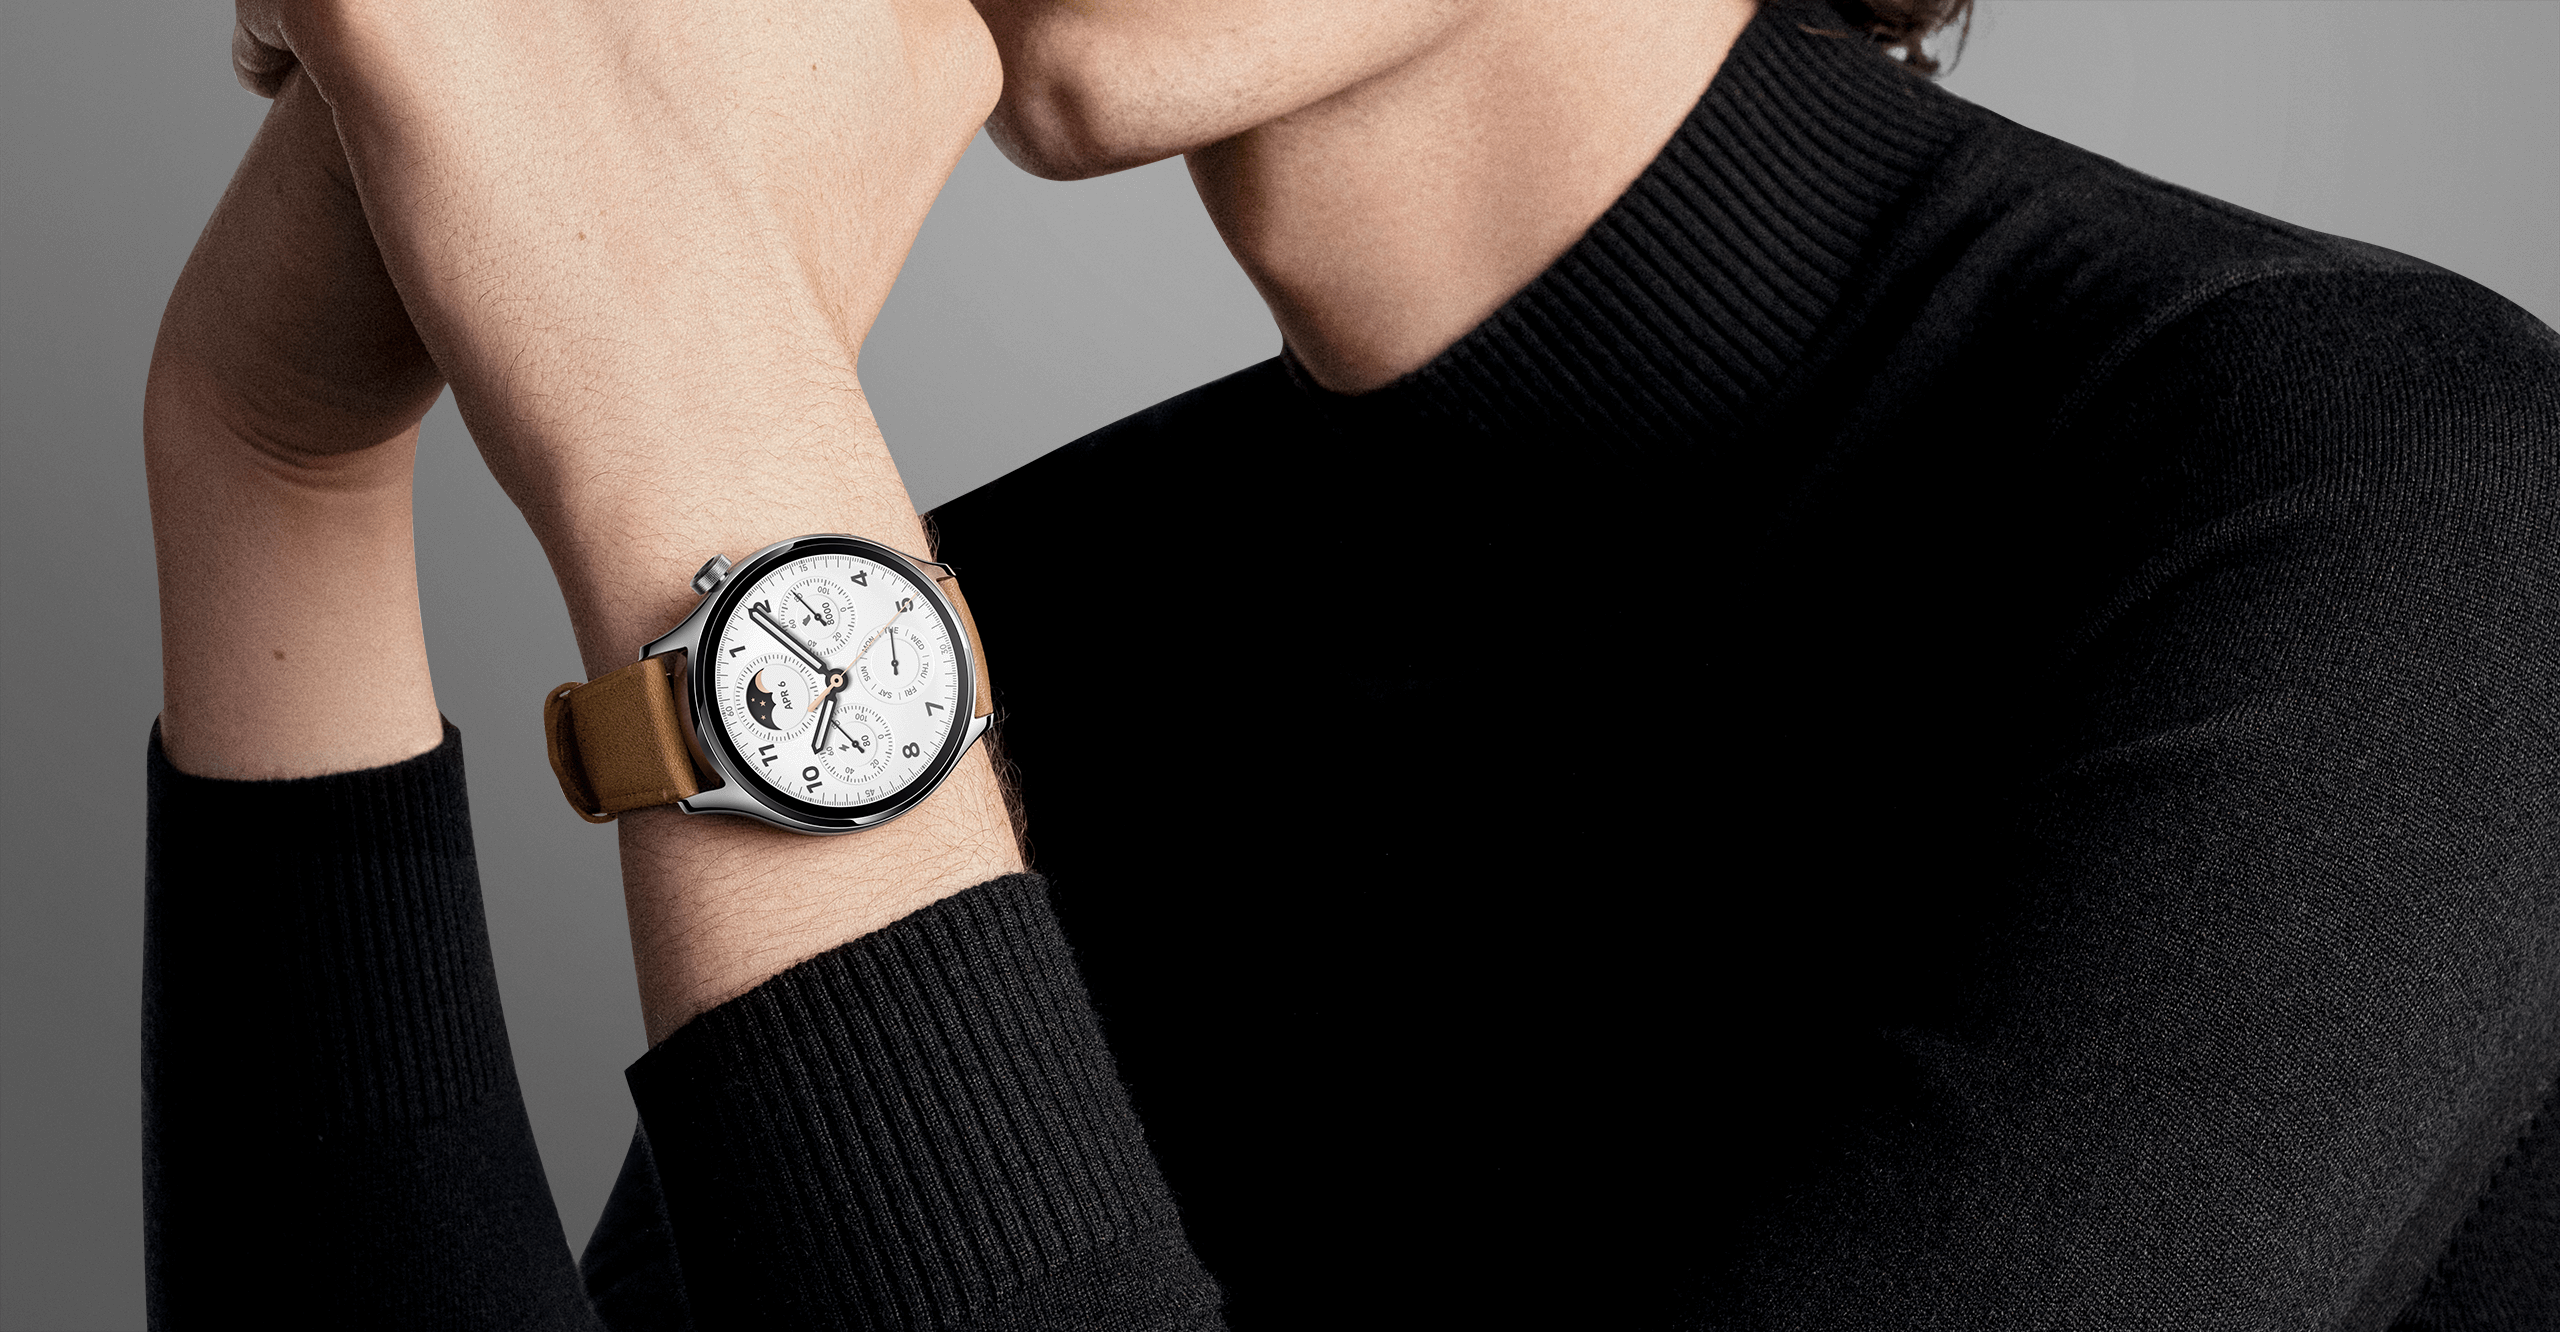 XIAOMI Watch S1 Pro GL, 205 - 135 mm, Smartwatch, Silver